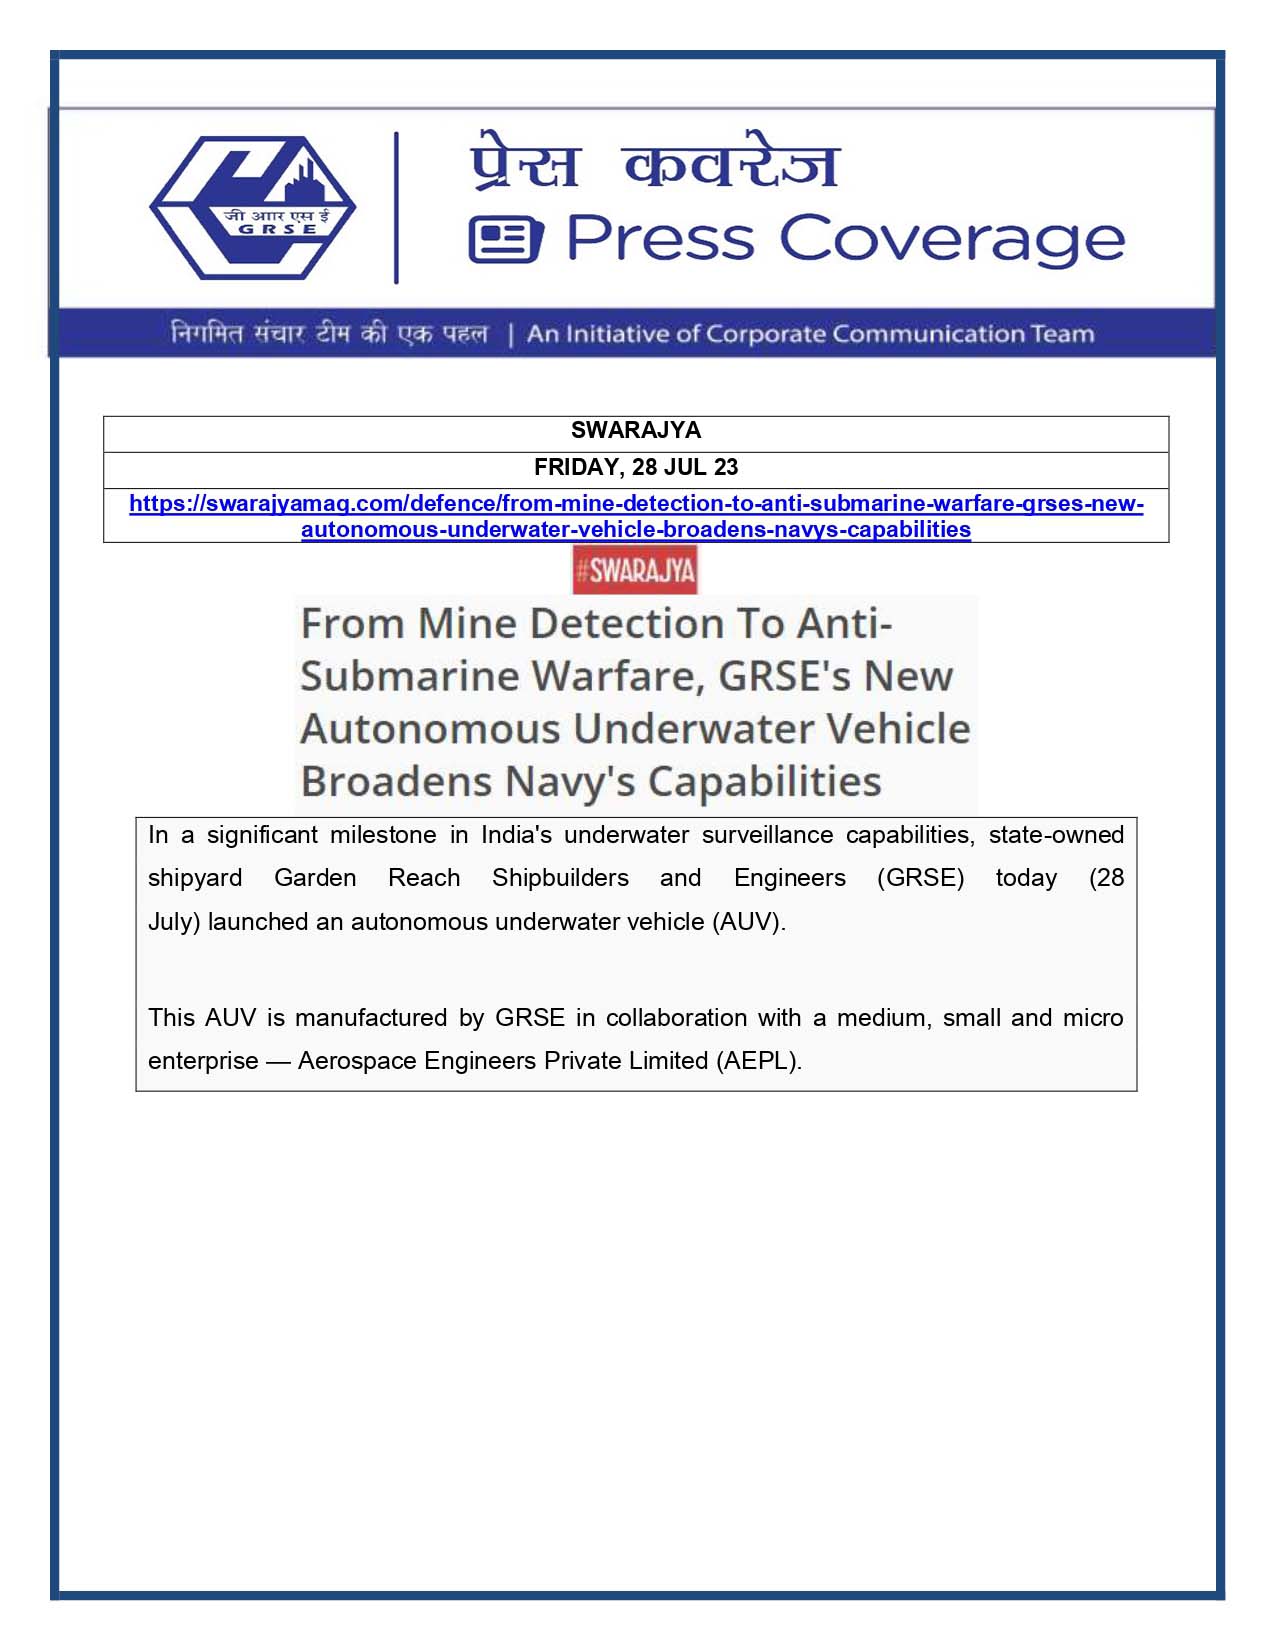 Press Coverage : Swarajya, 28 Jul 23 : From Mine Detection to Anti-Submarine Warfare, GRSE's New Autonomous Underwater Vehicle Broadens Navy Capabilities